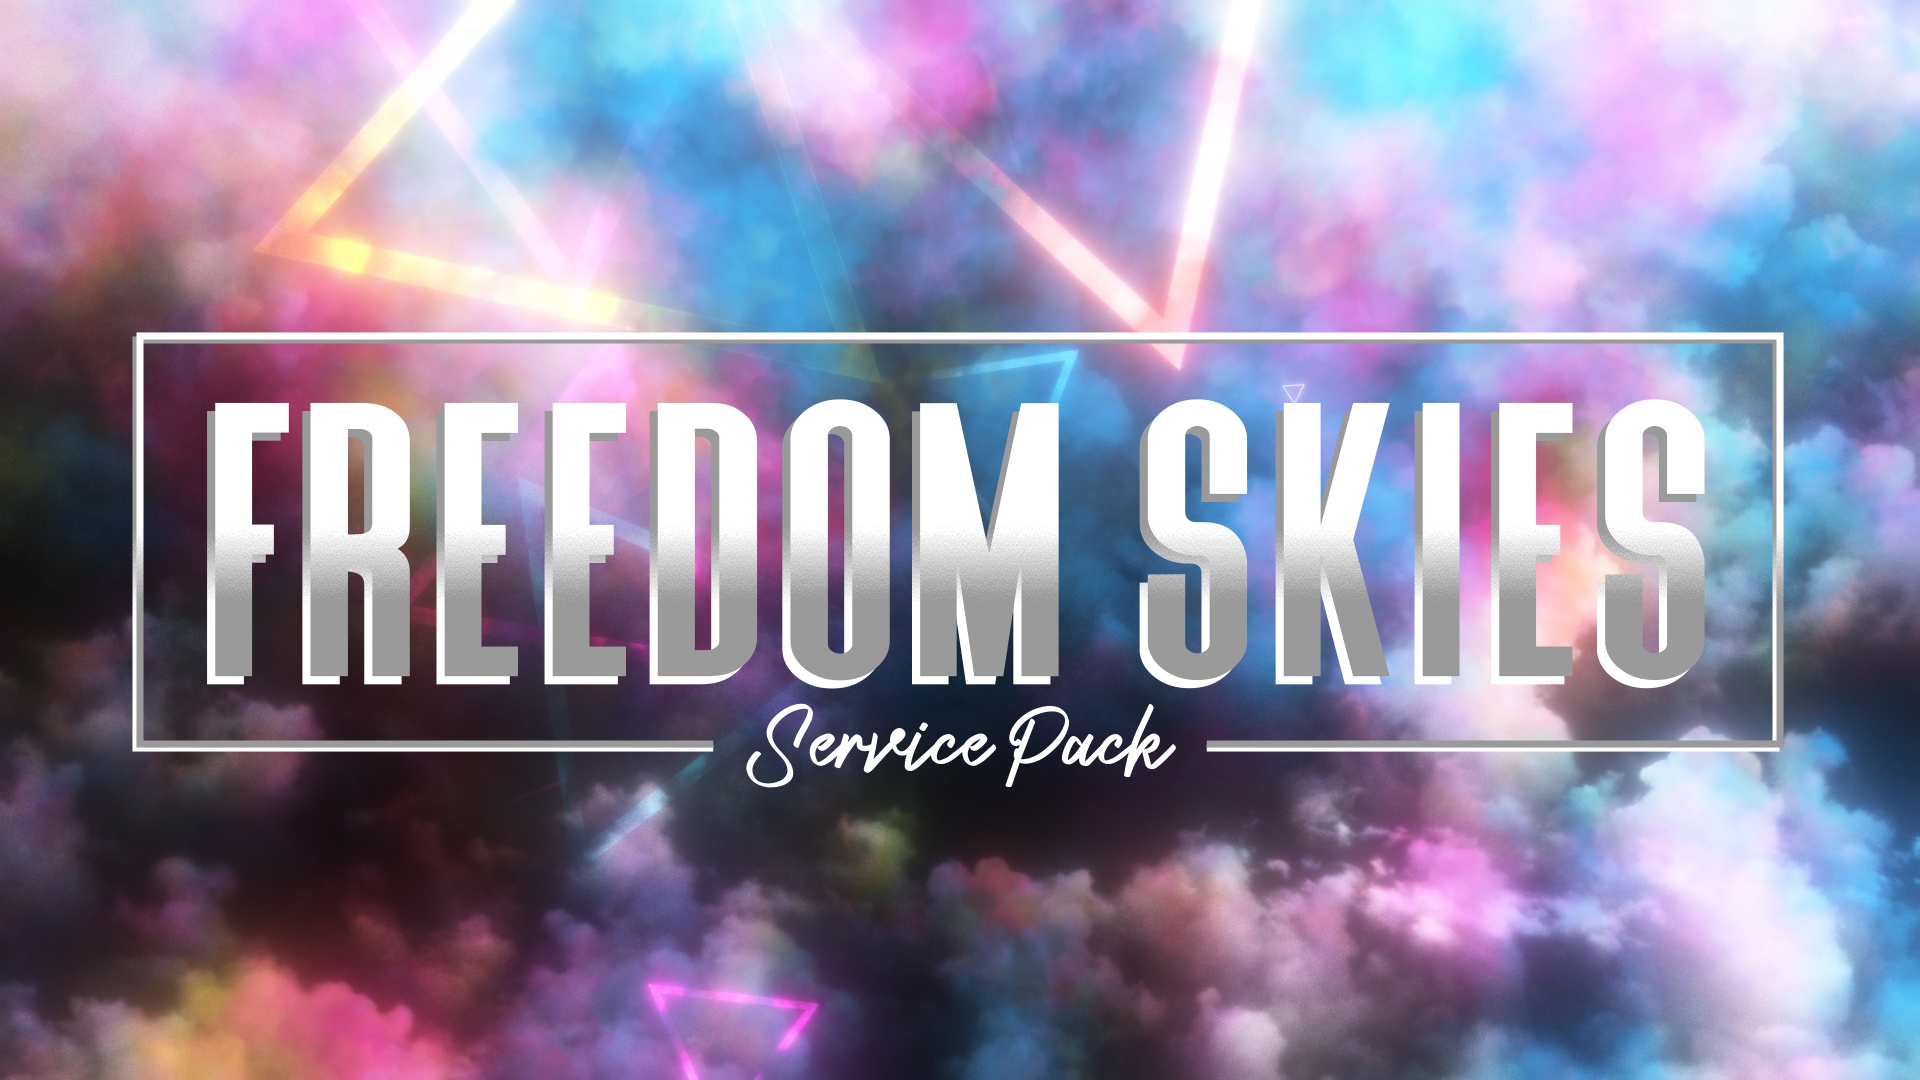 Freedom Skies Service Pack